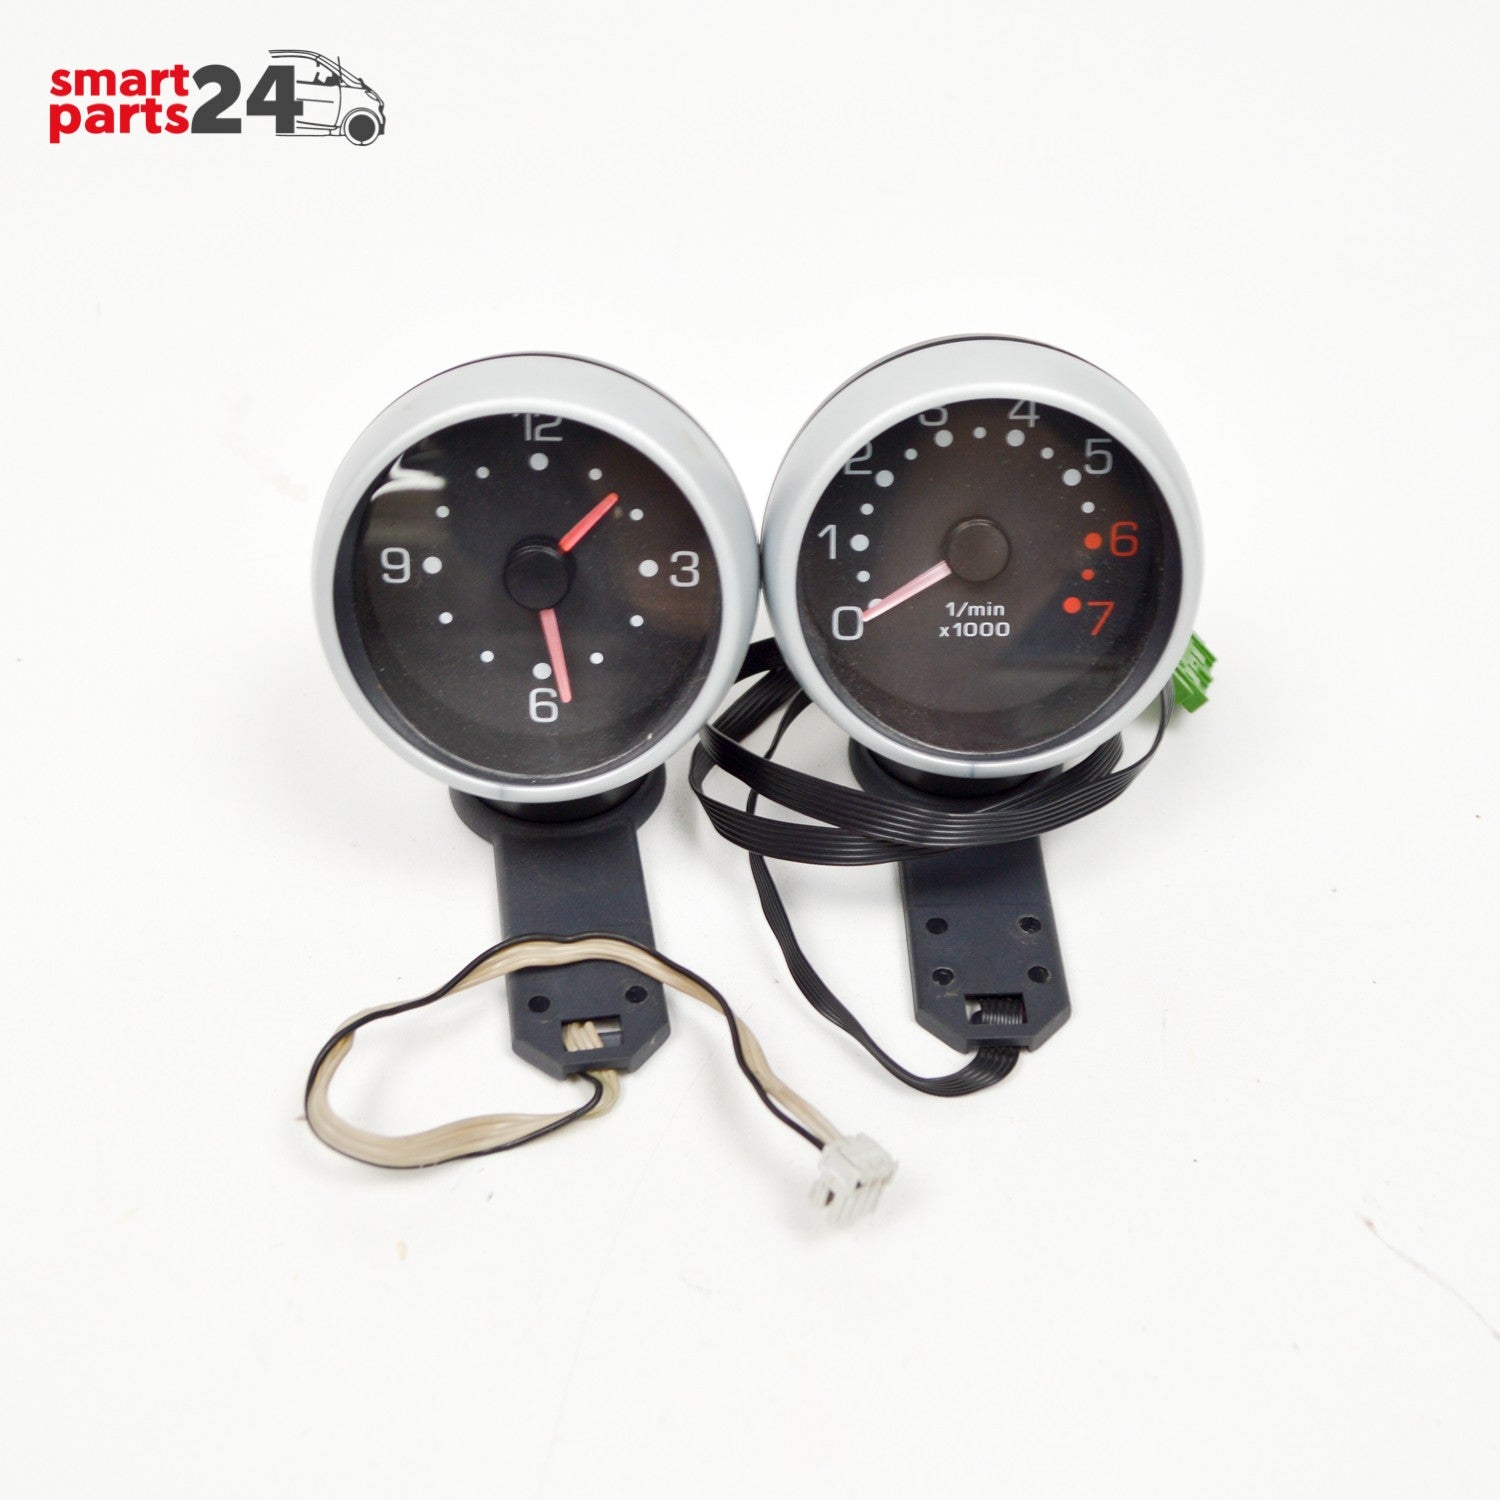 Smart Fortwo 450 rev counter clock set petrol gray (used)